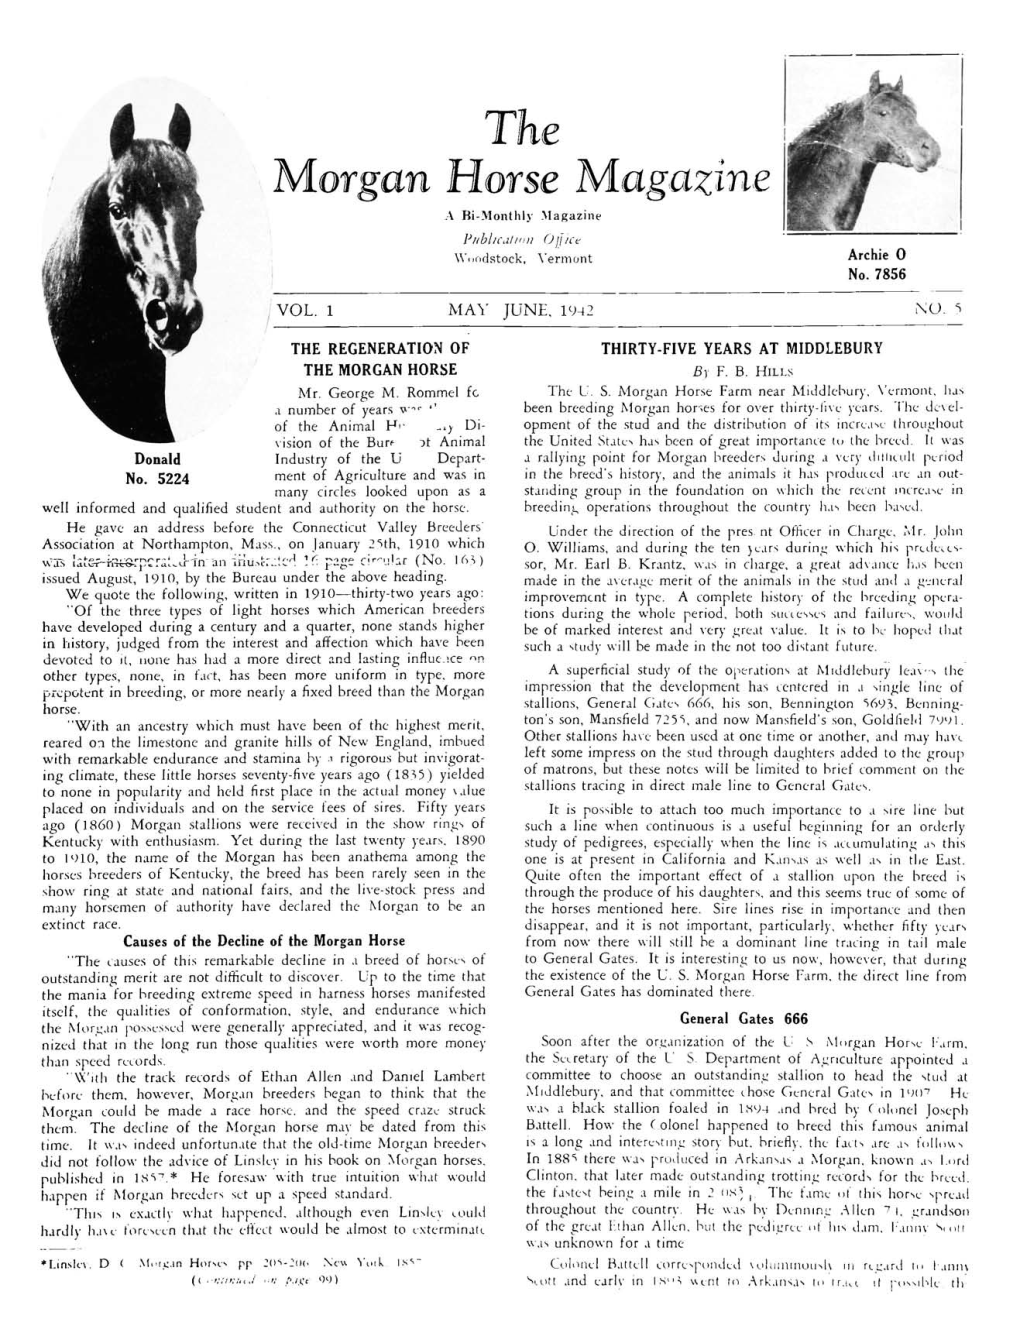 Morgan Horse Magazi a Bi-Monthly .Magazine Pnblicah'di Ofjict Woodstock, Vermont Archie 0 No